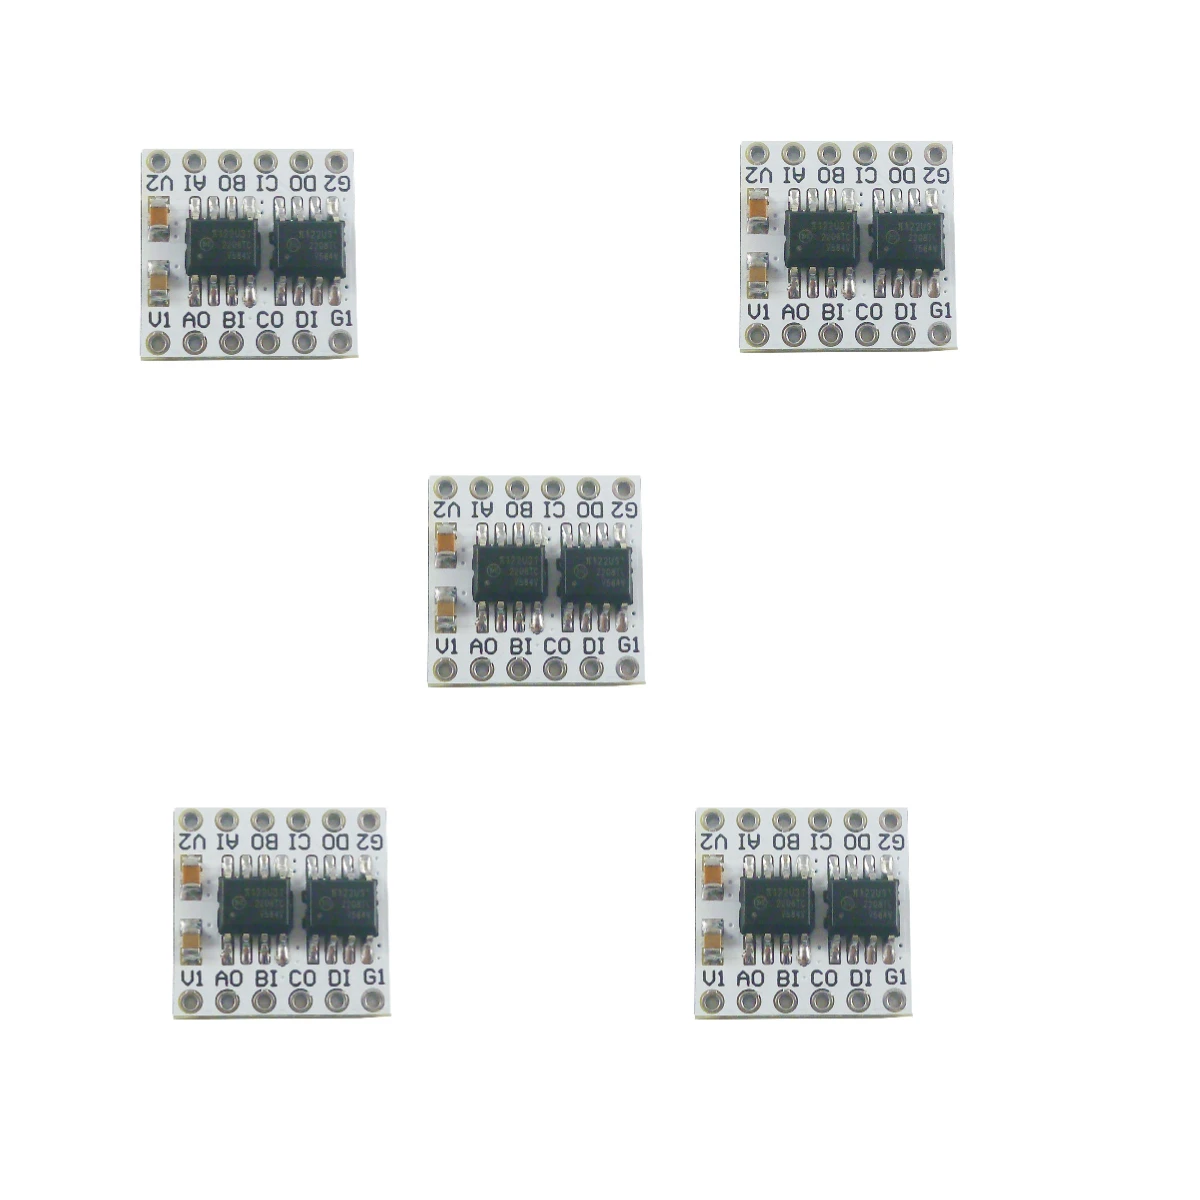 

DC 3.3V 5V 2/4/8Ch 3000Vrms 150Kbps Digital Isolators TTL LvTTL Level Converter Module for Arduino UNO MEGA Raspberry pi pico w